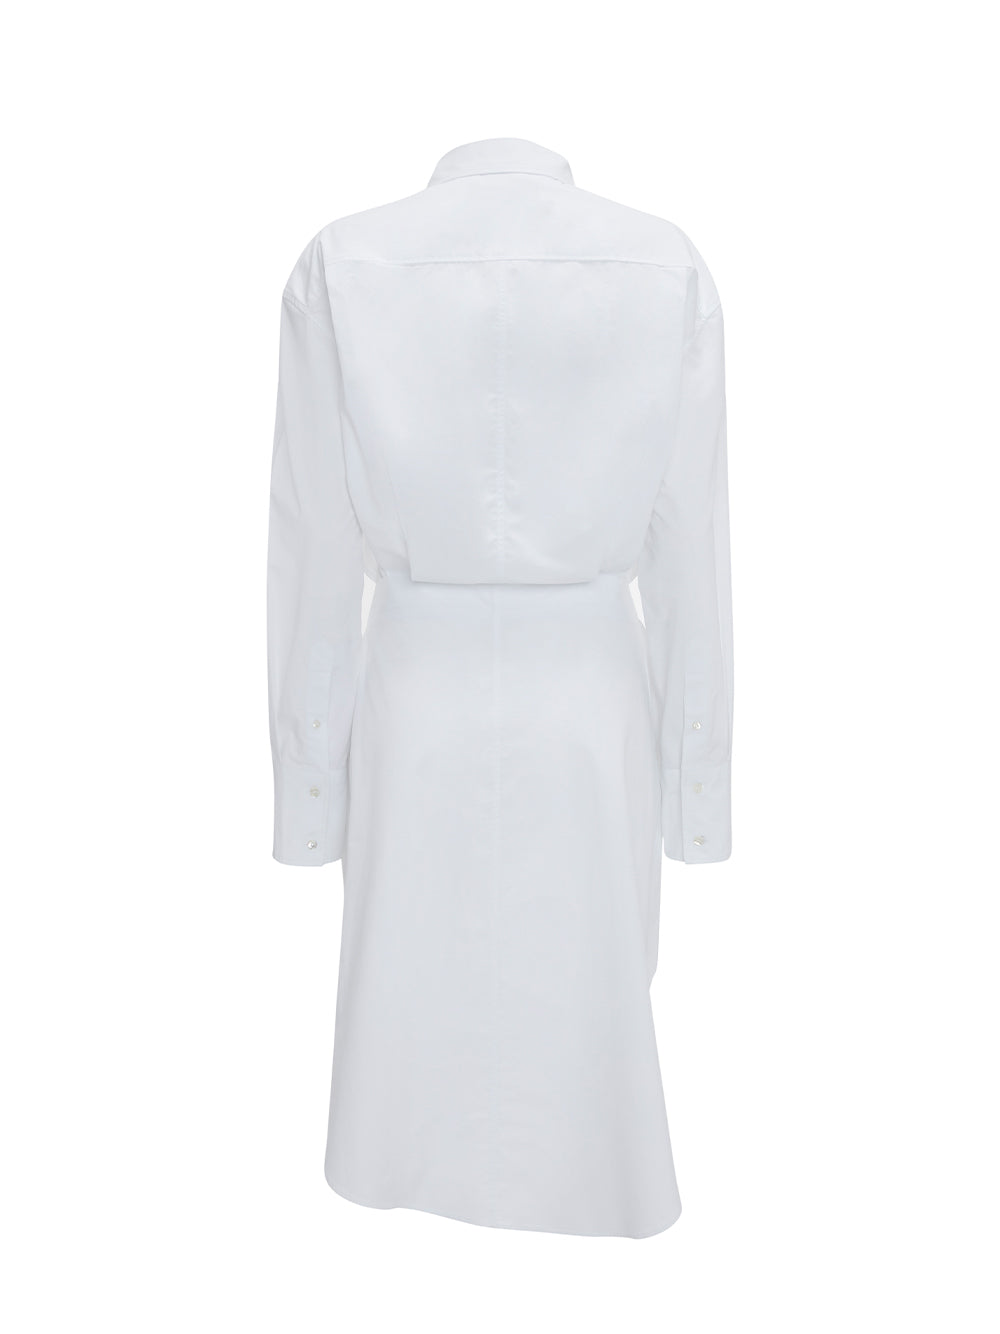 Knot Front Hybrid Shirt Dress (White)